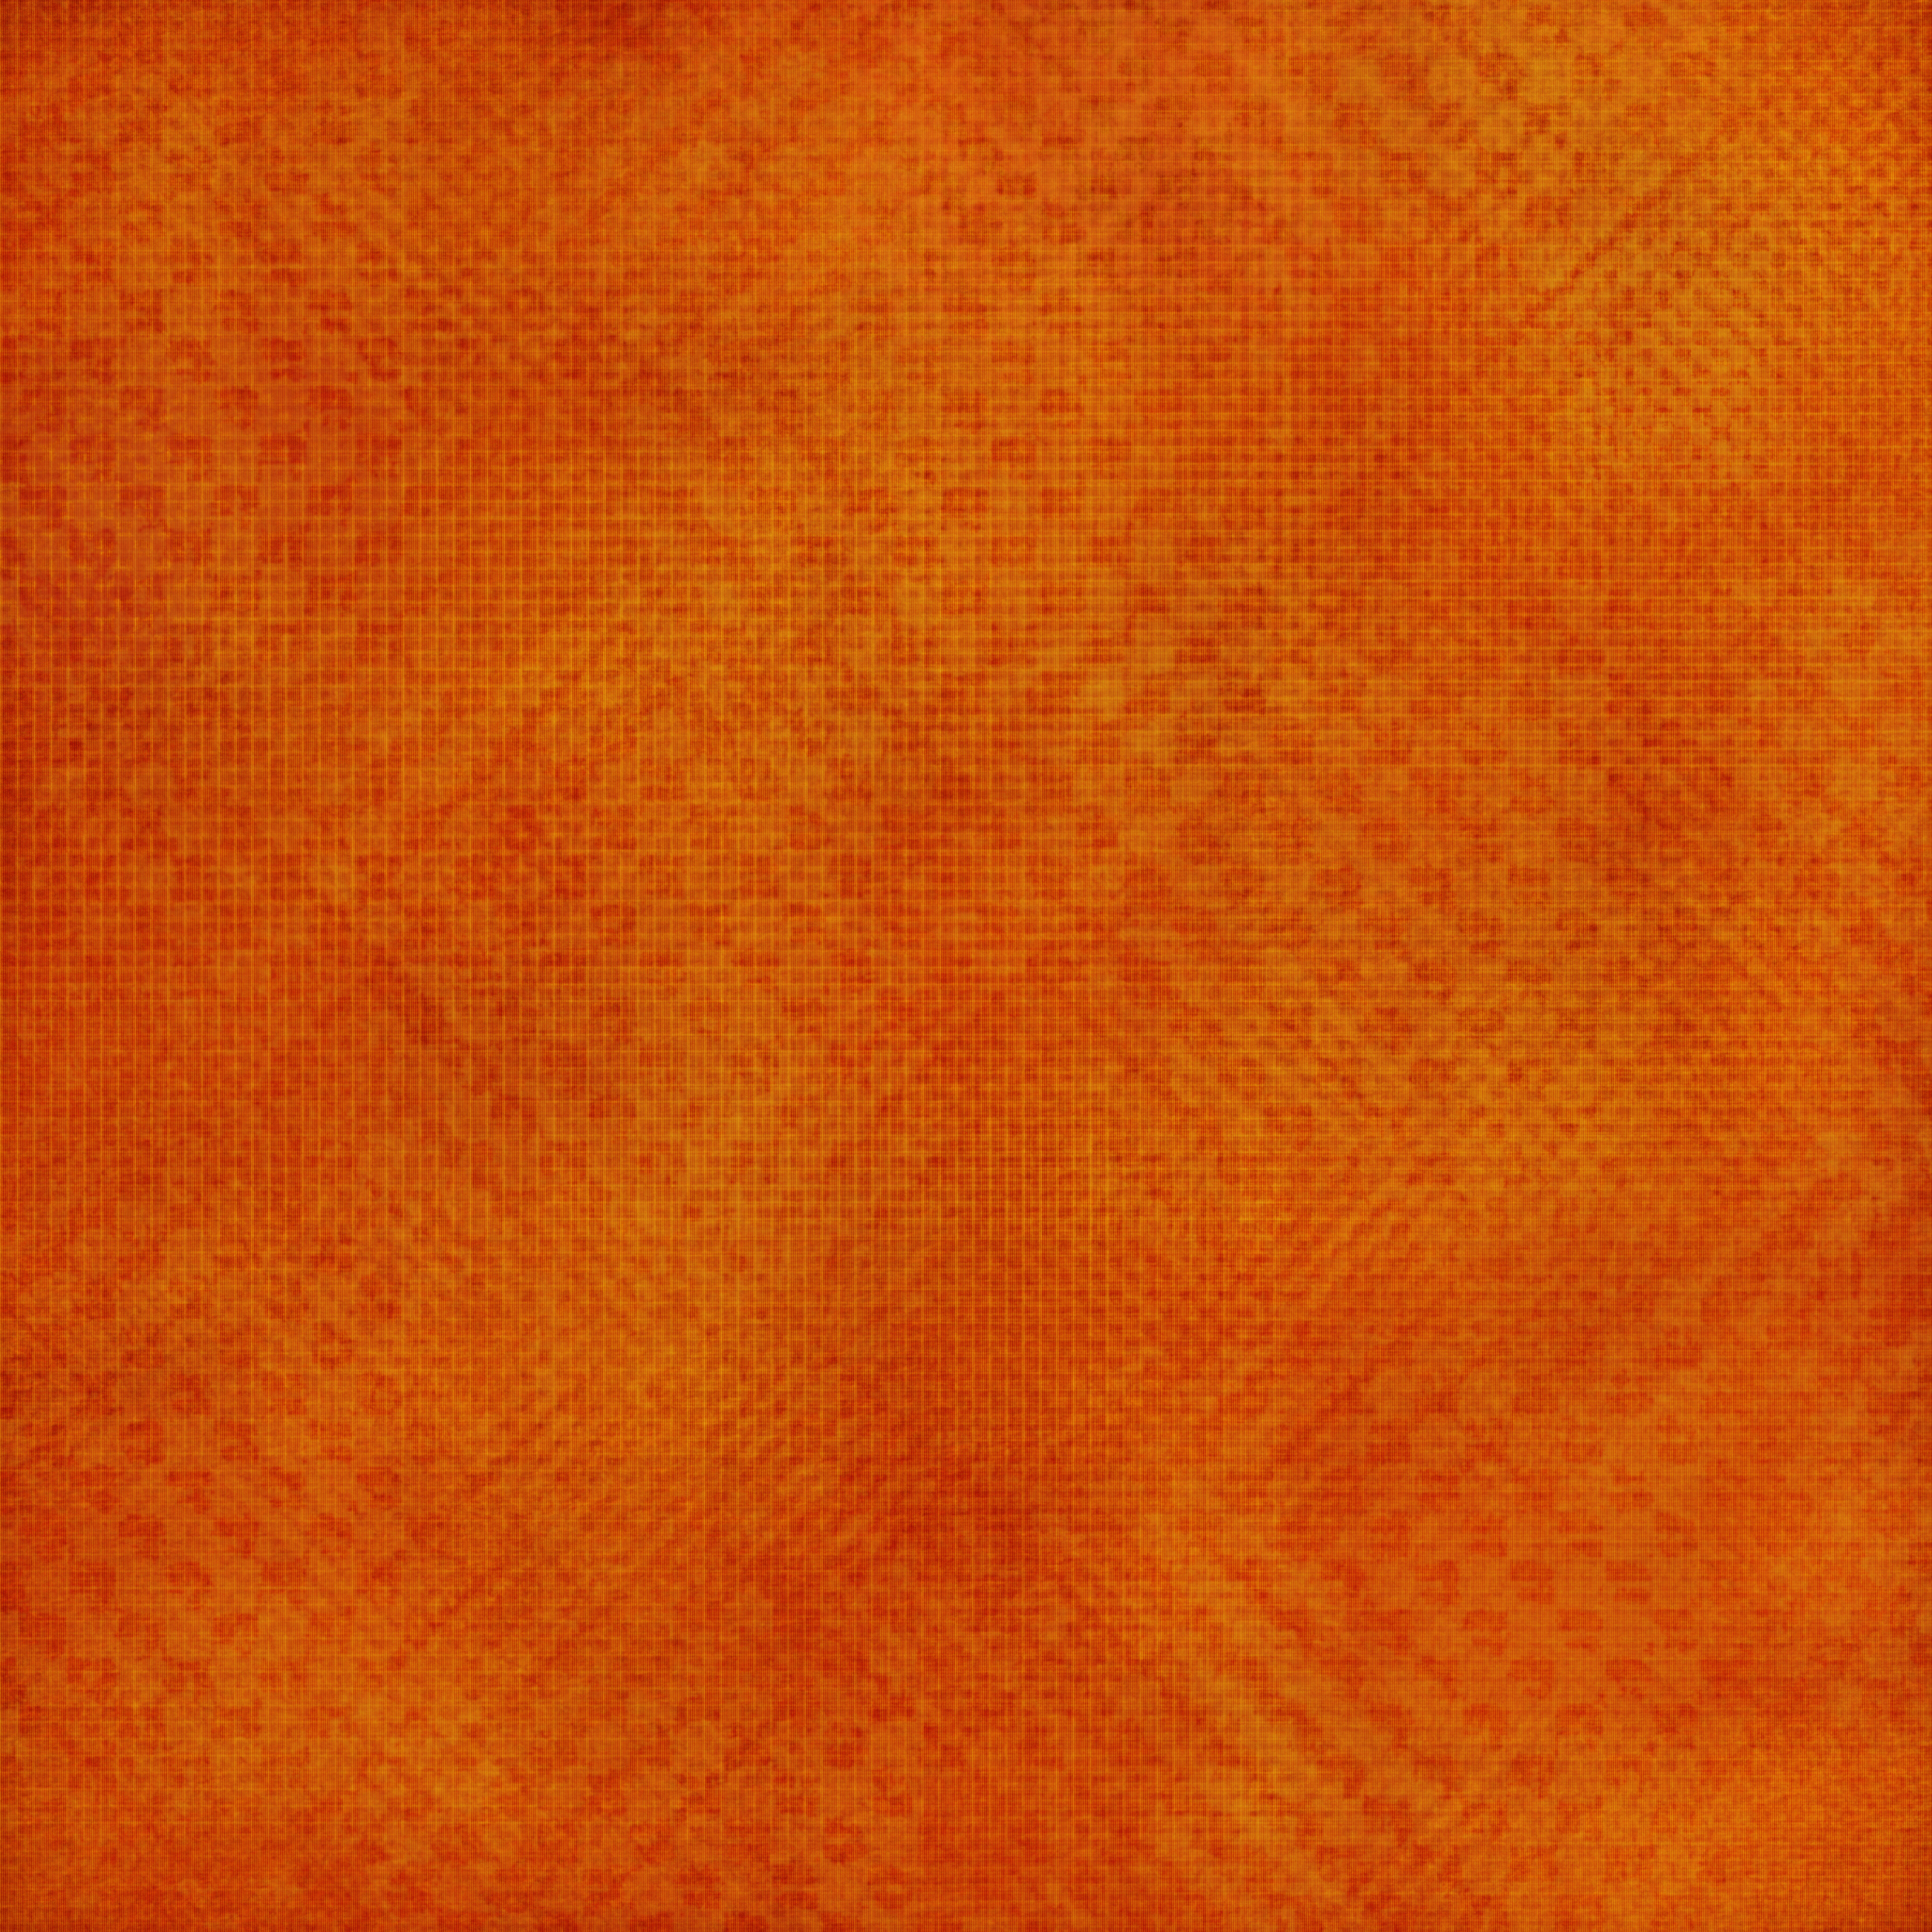 Orange grunge texture background image, free download